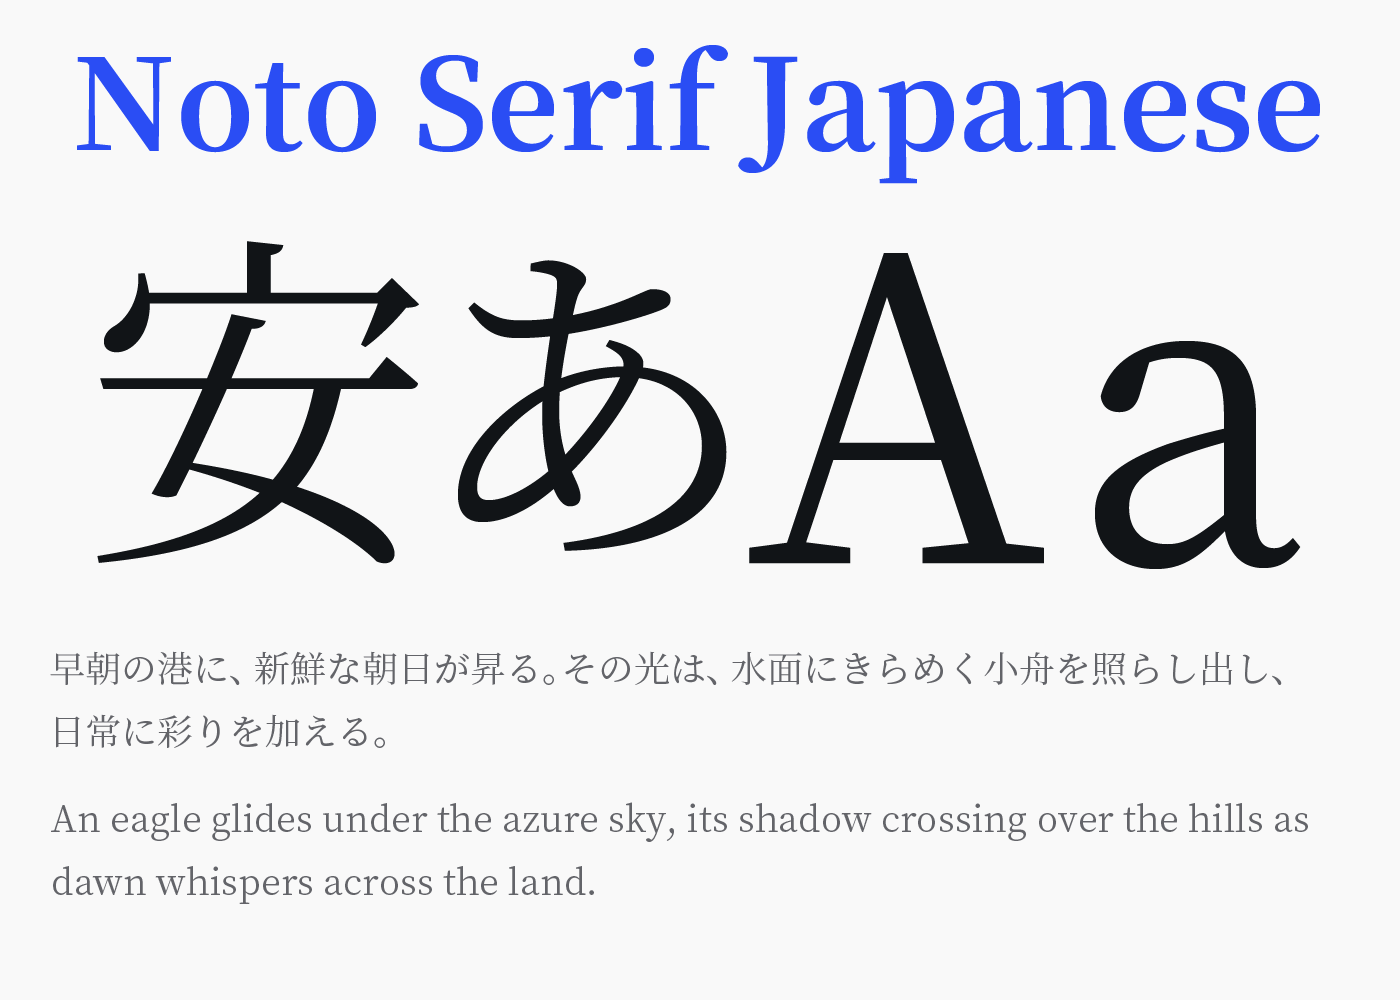 Noto Serif Japanese